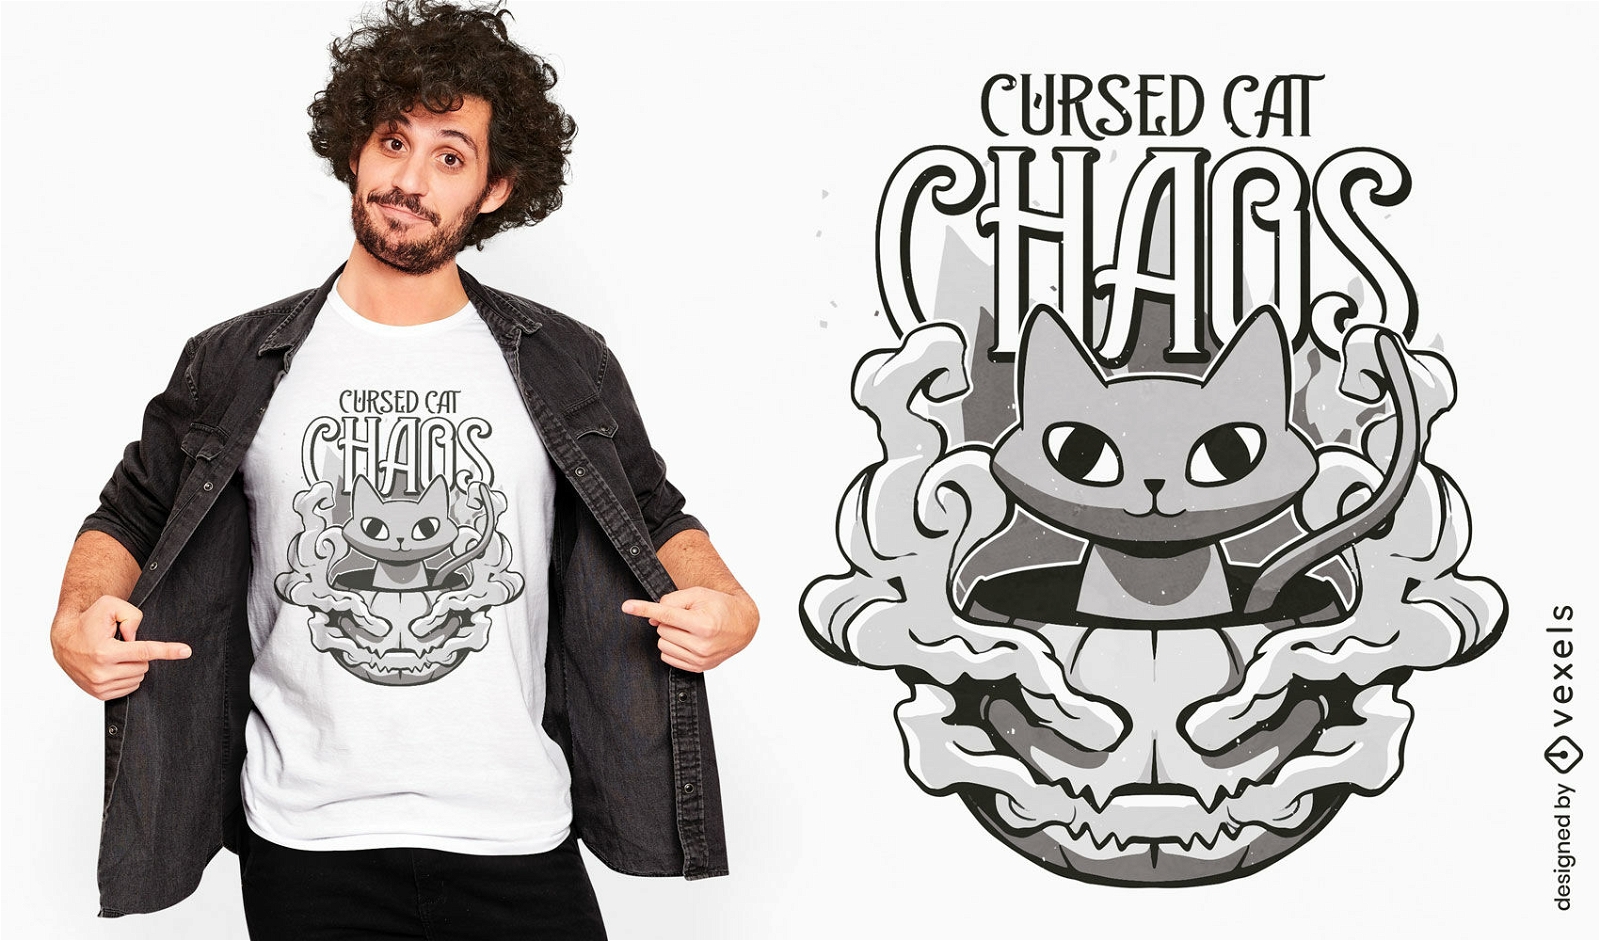 Halloween cat chaos quote t-shirt design